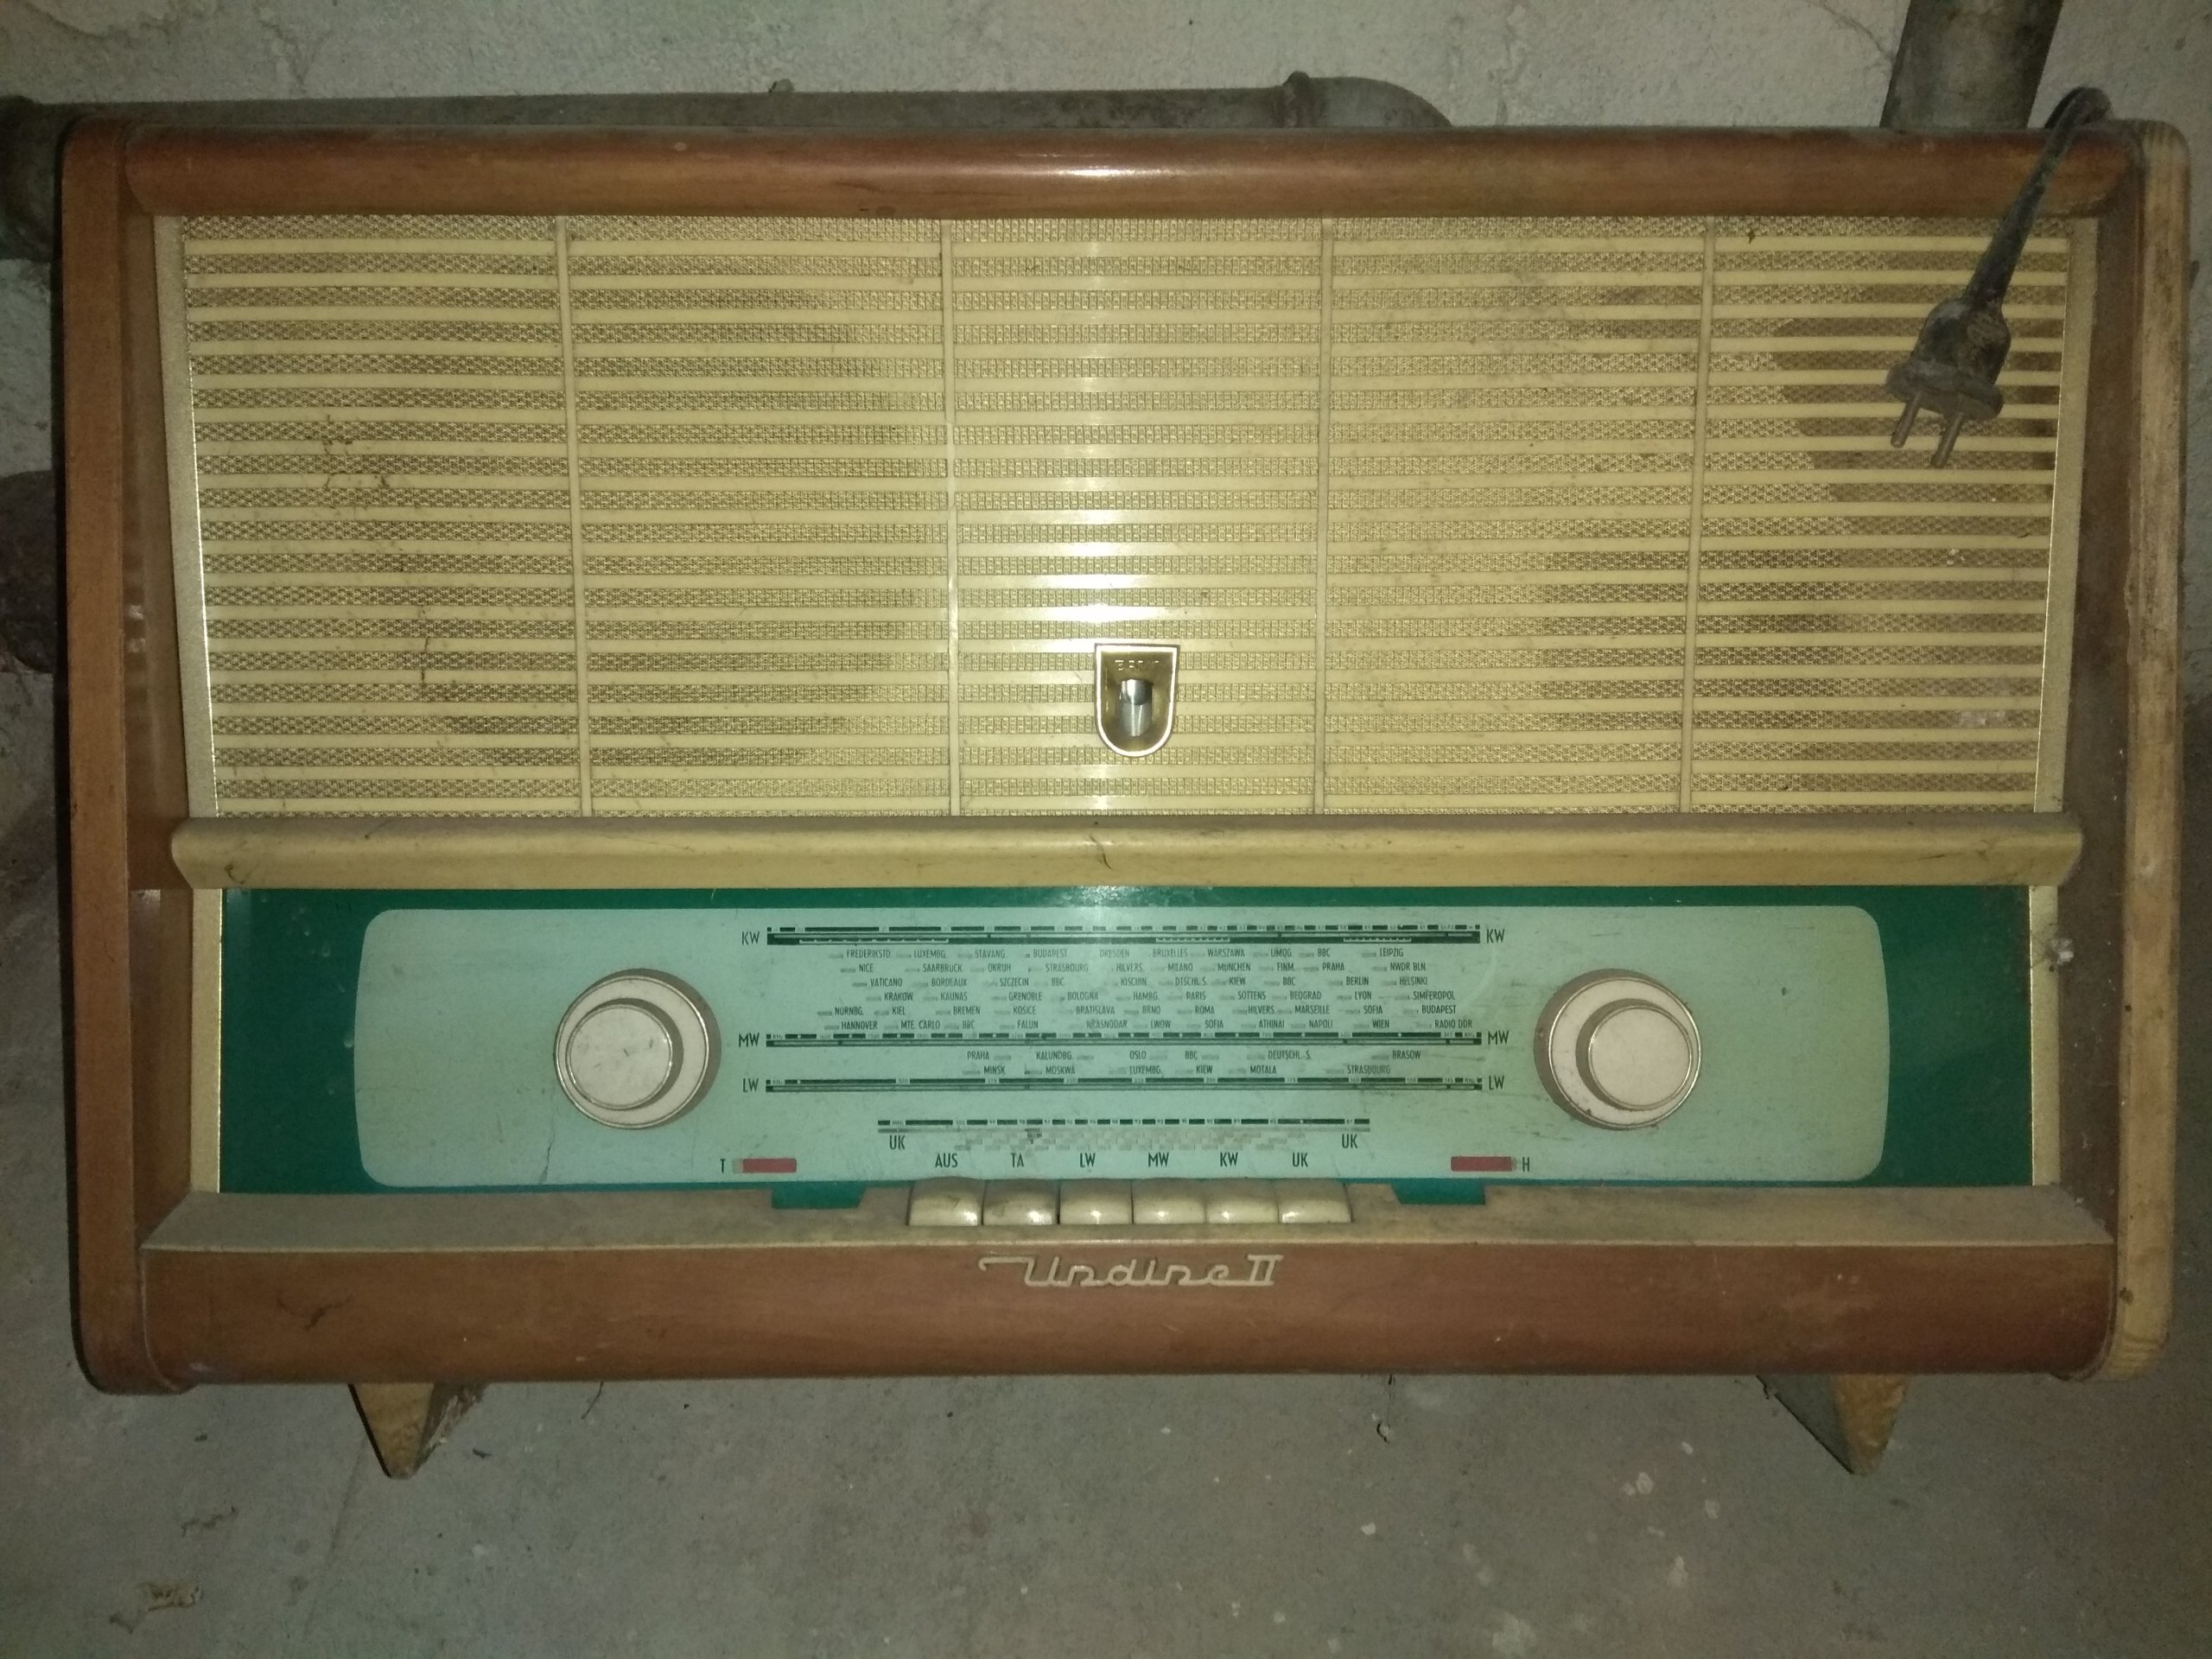 Stare niemieckie radio Undine II - 7054648405 - oficjalne archiwum Allegro